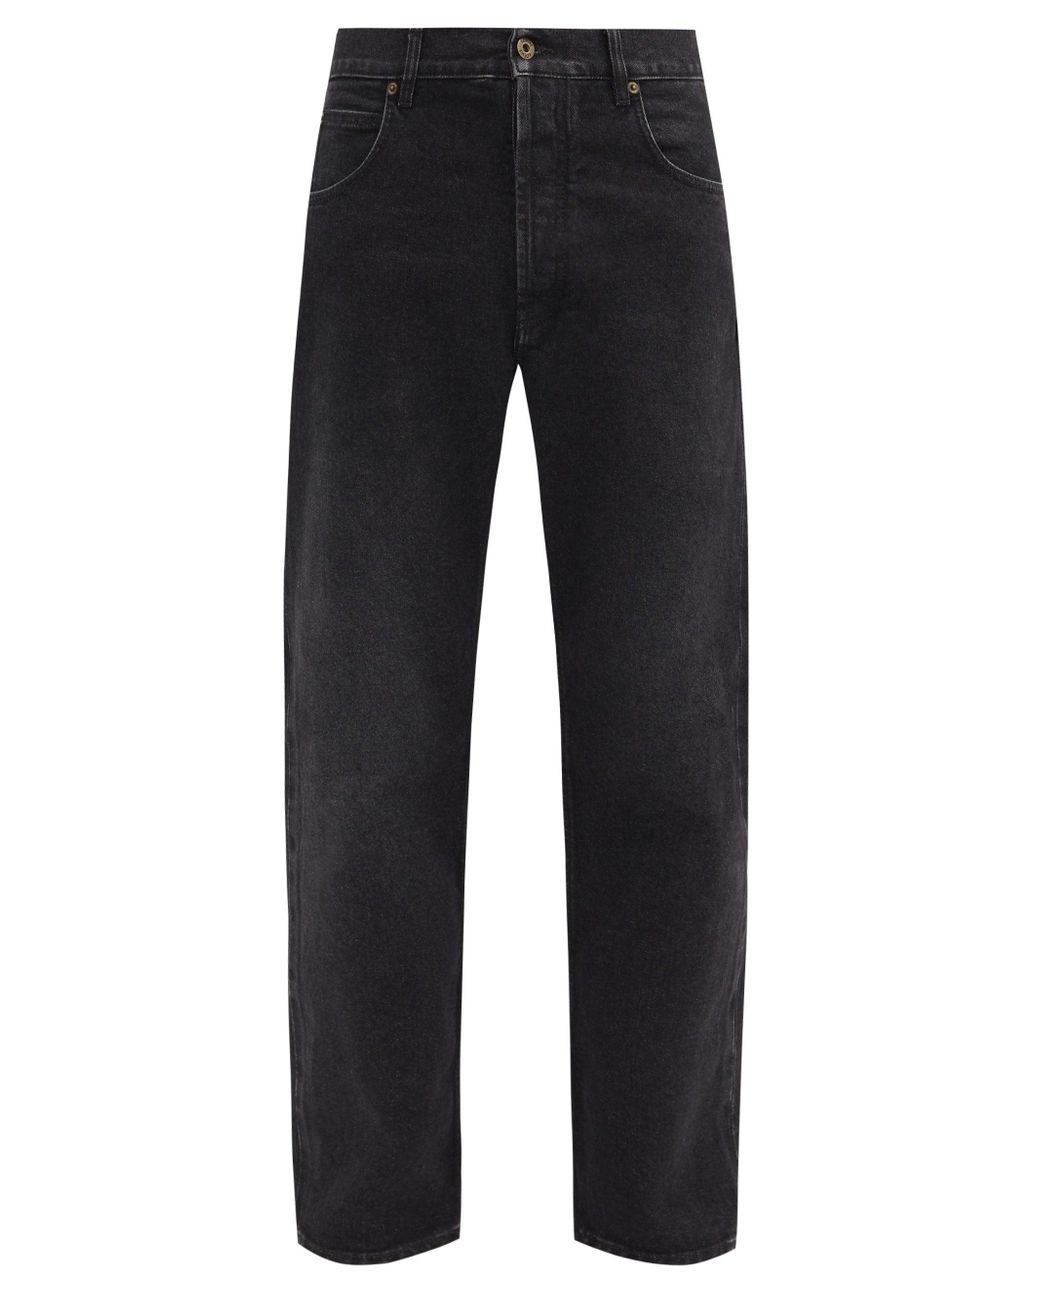 Loewe Denim Logo-patch Slim-leg Jeans in Black for Men - Lyst